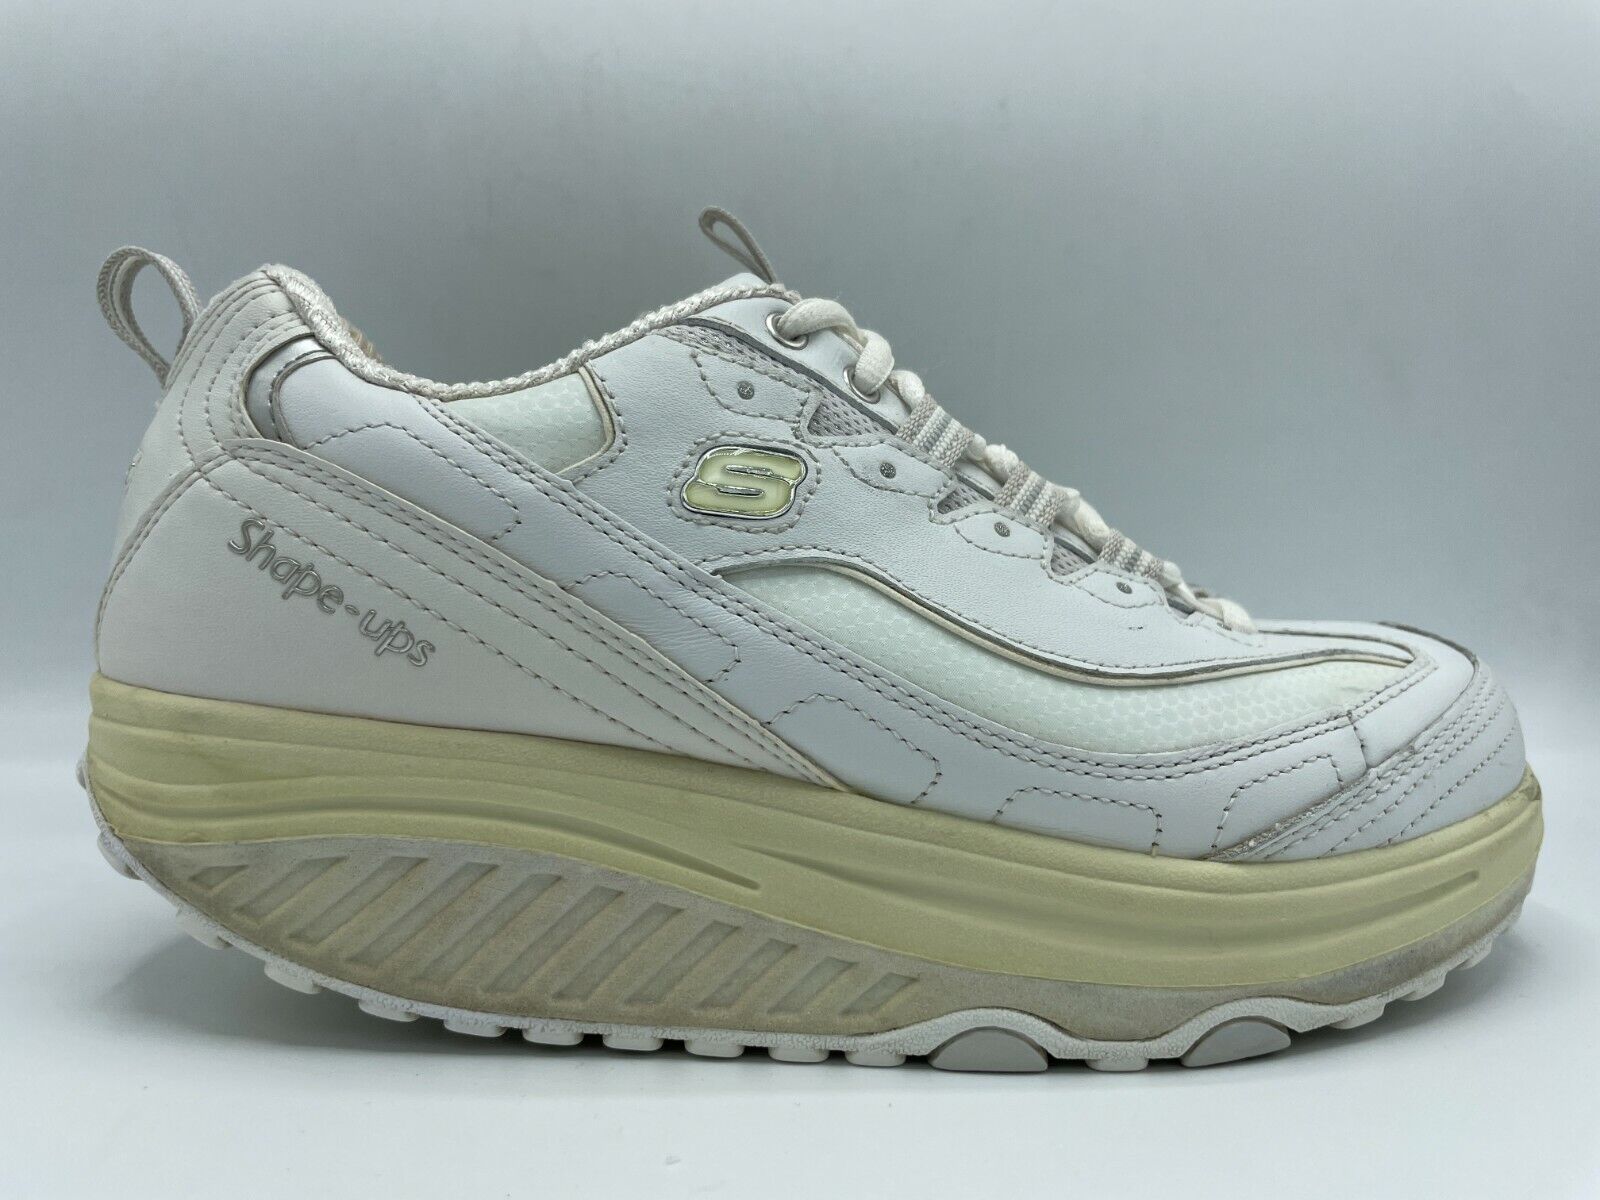 SKECHERS Shape Ups 11800 Size 8 White Leather Fitness Walking Shoes | eBay